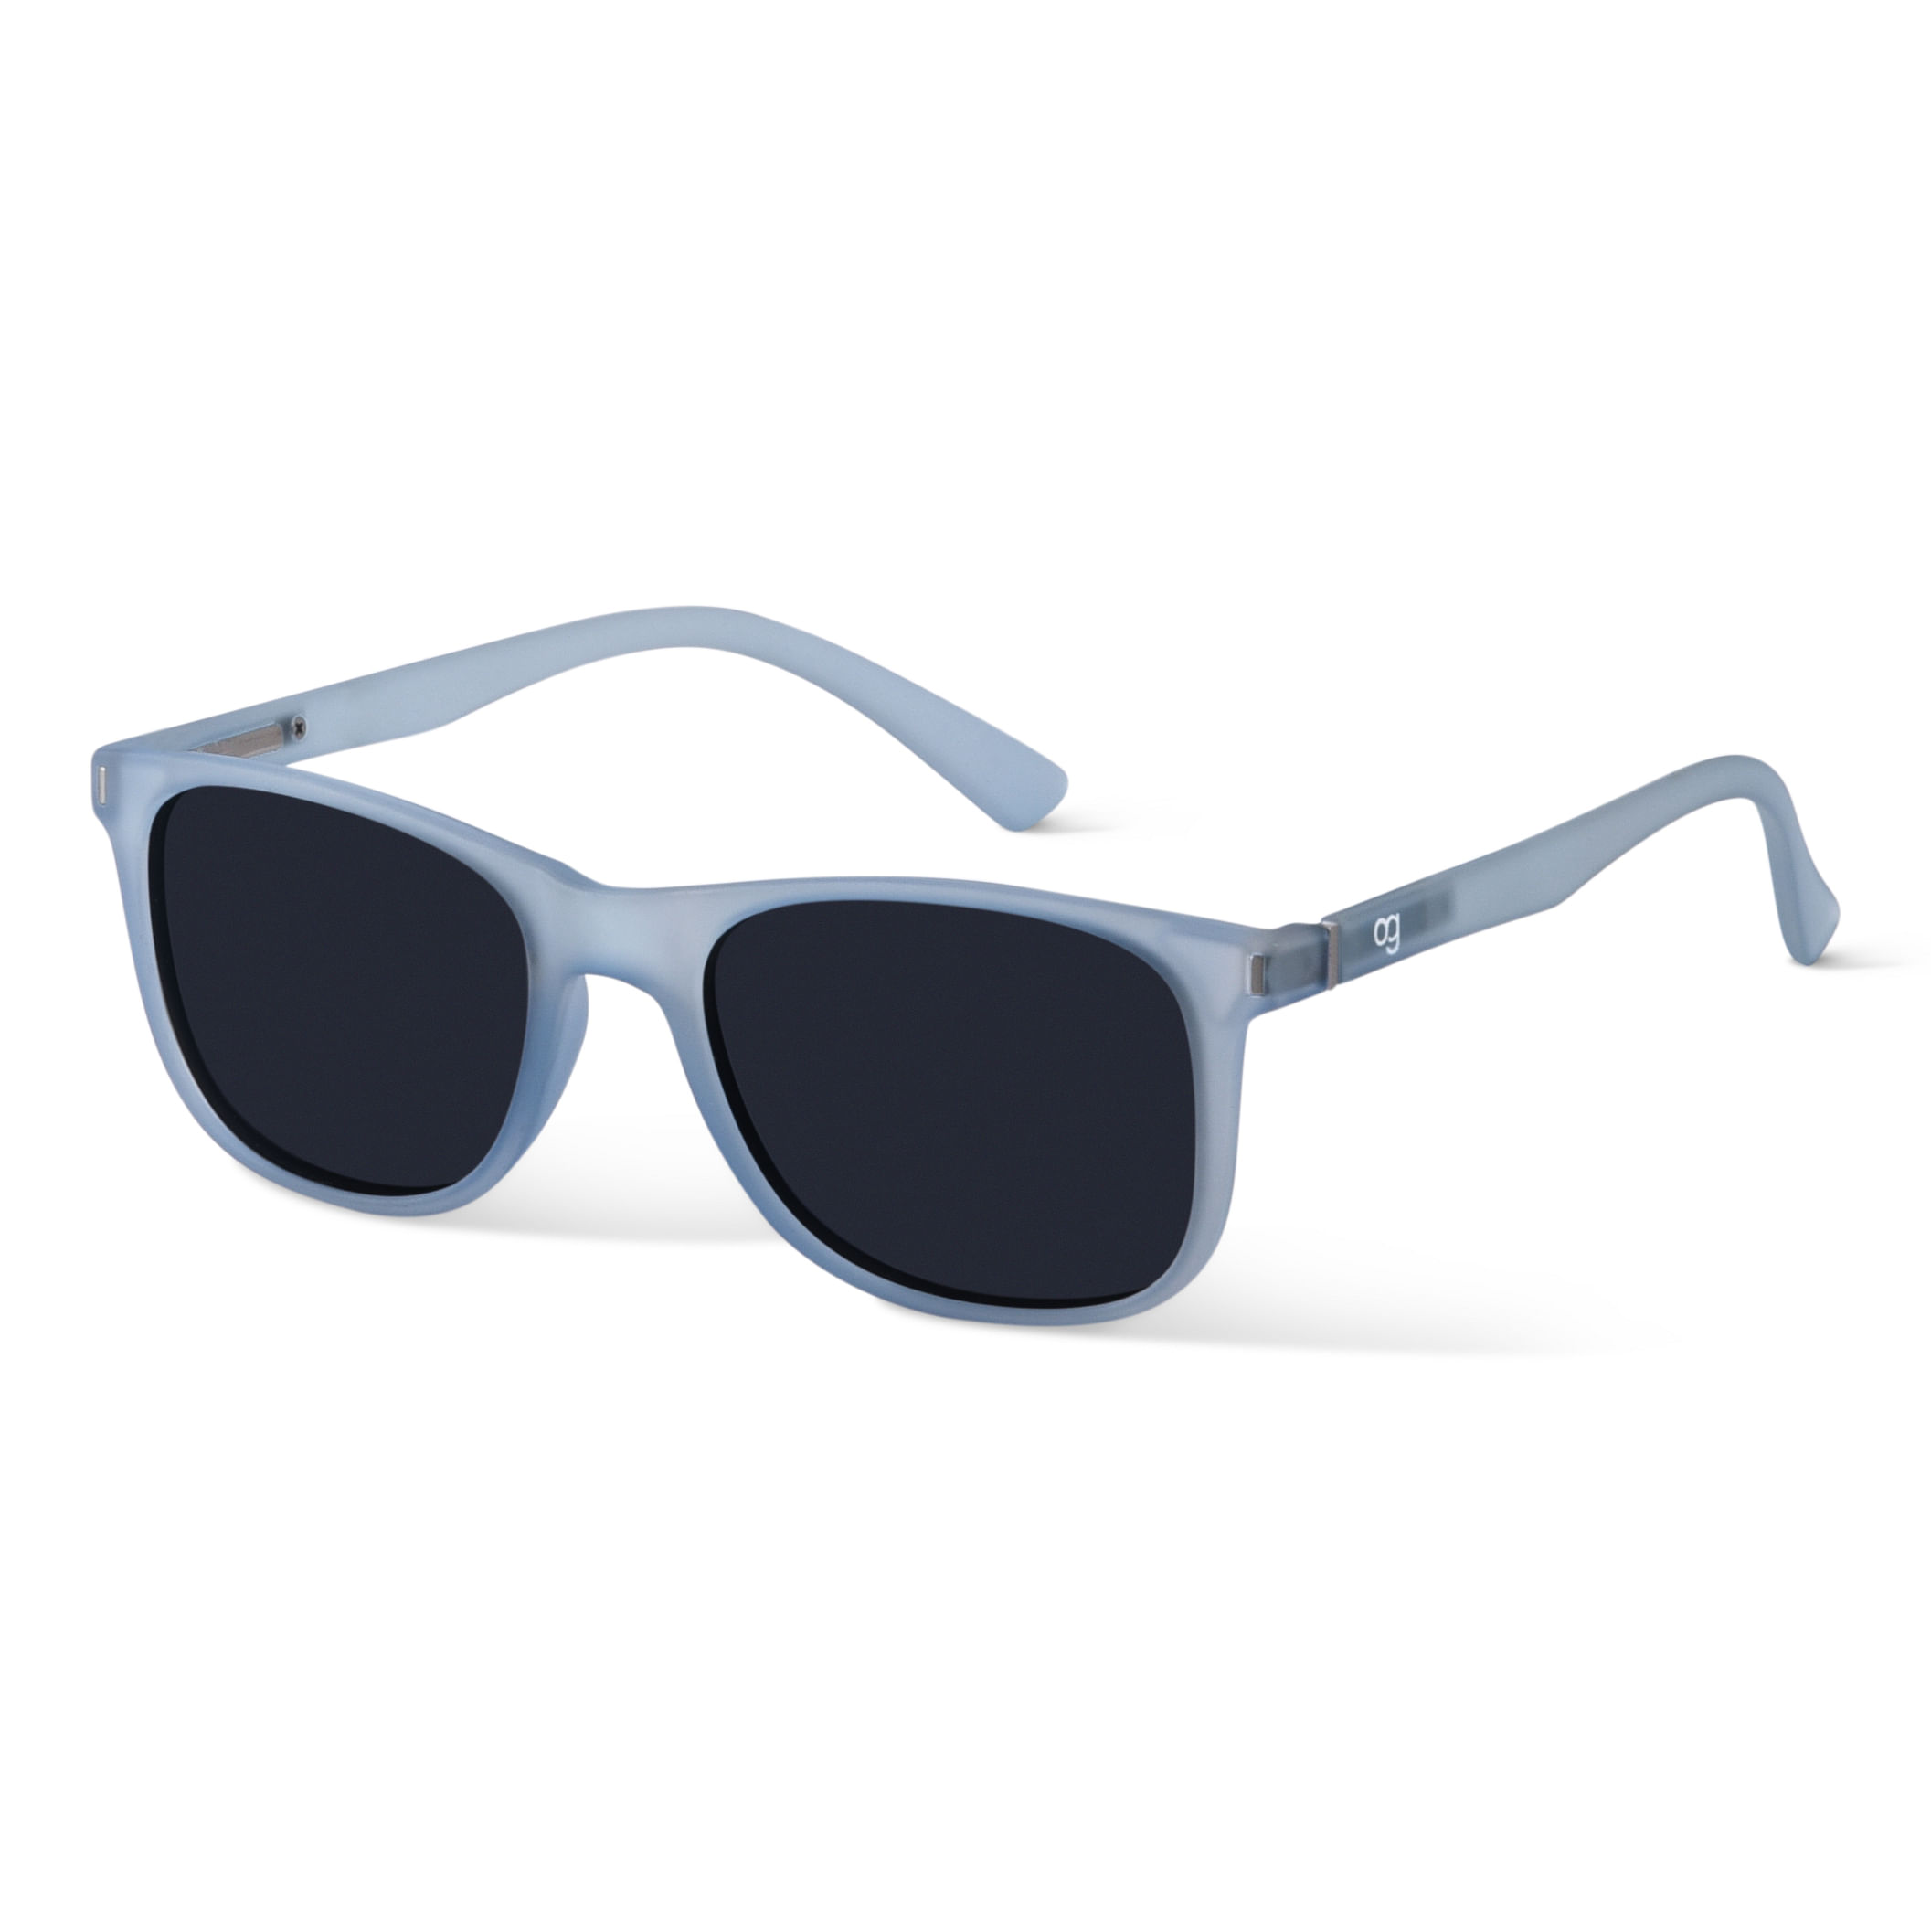 Blue Kids Childrens Sunglasses UV400 Classic Shades Fashion Glasses Boys  Girls | eBay